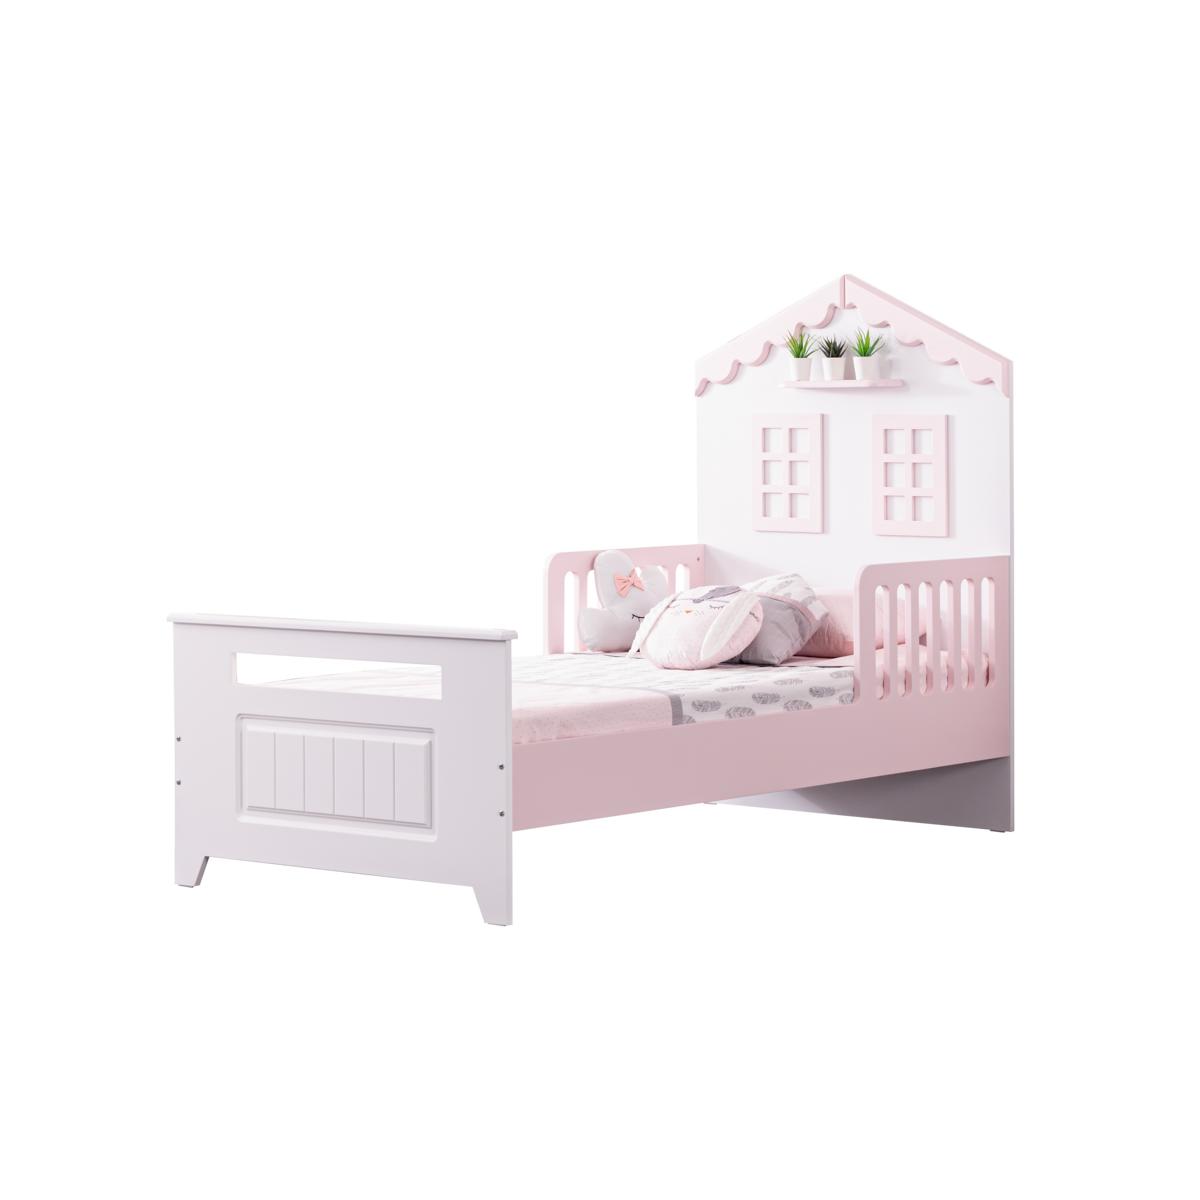 Odacix Kinderbett Fethiye 90x190 cm Weiß Rosa